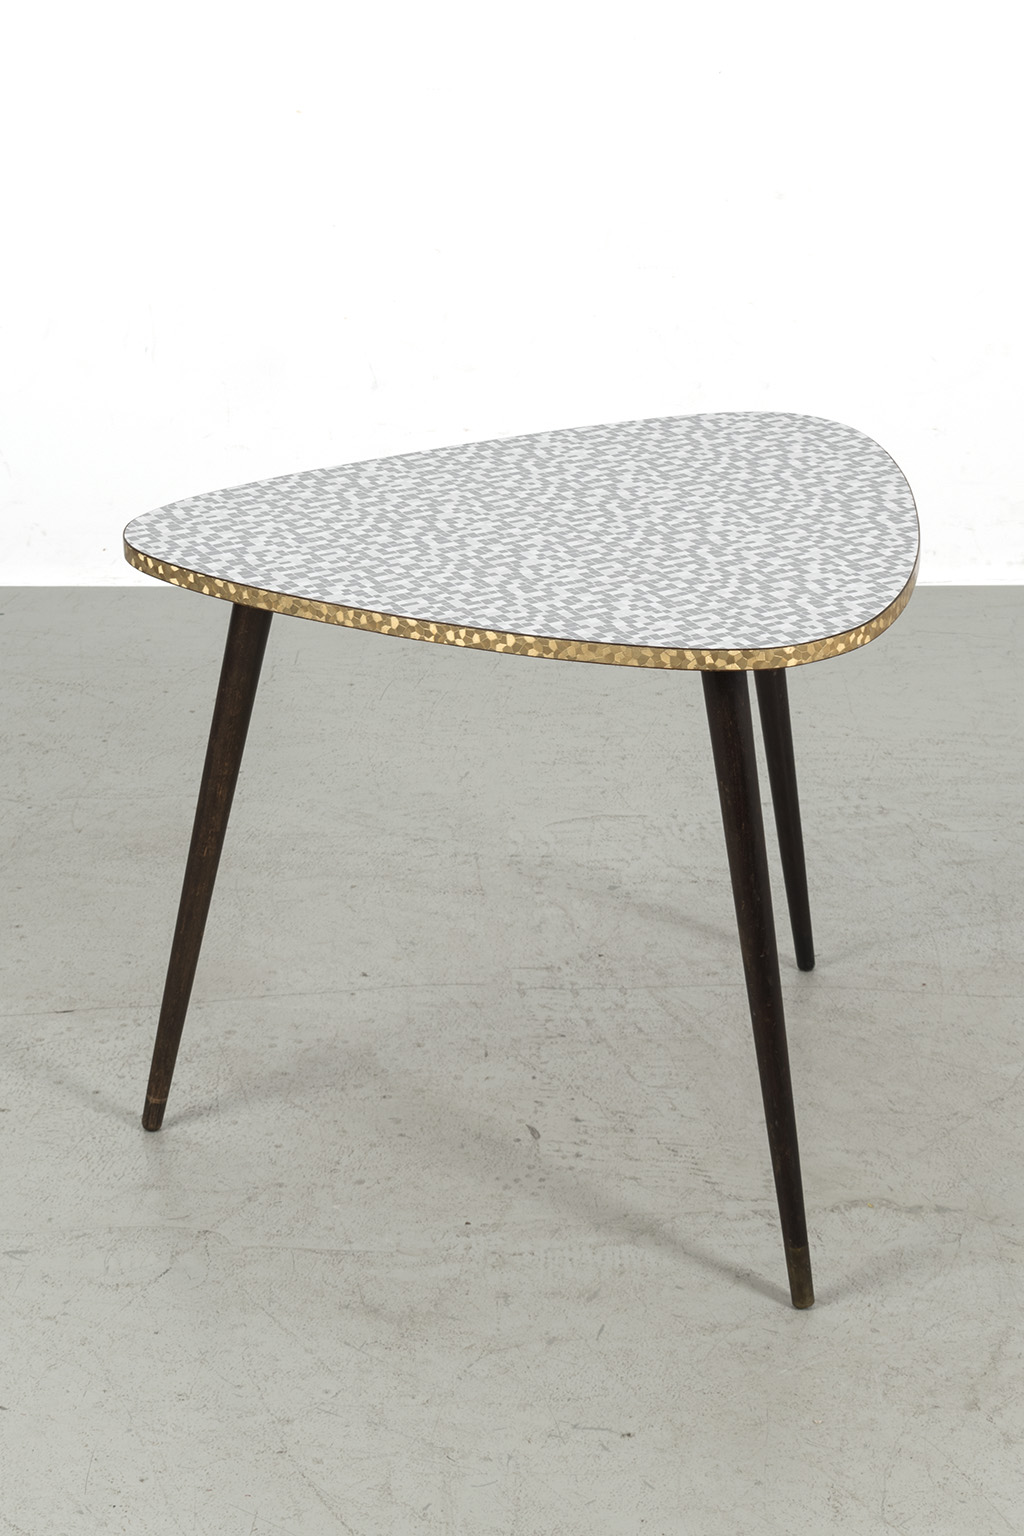 Triangular coffee table/side table